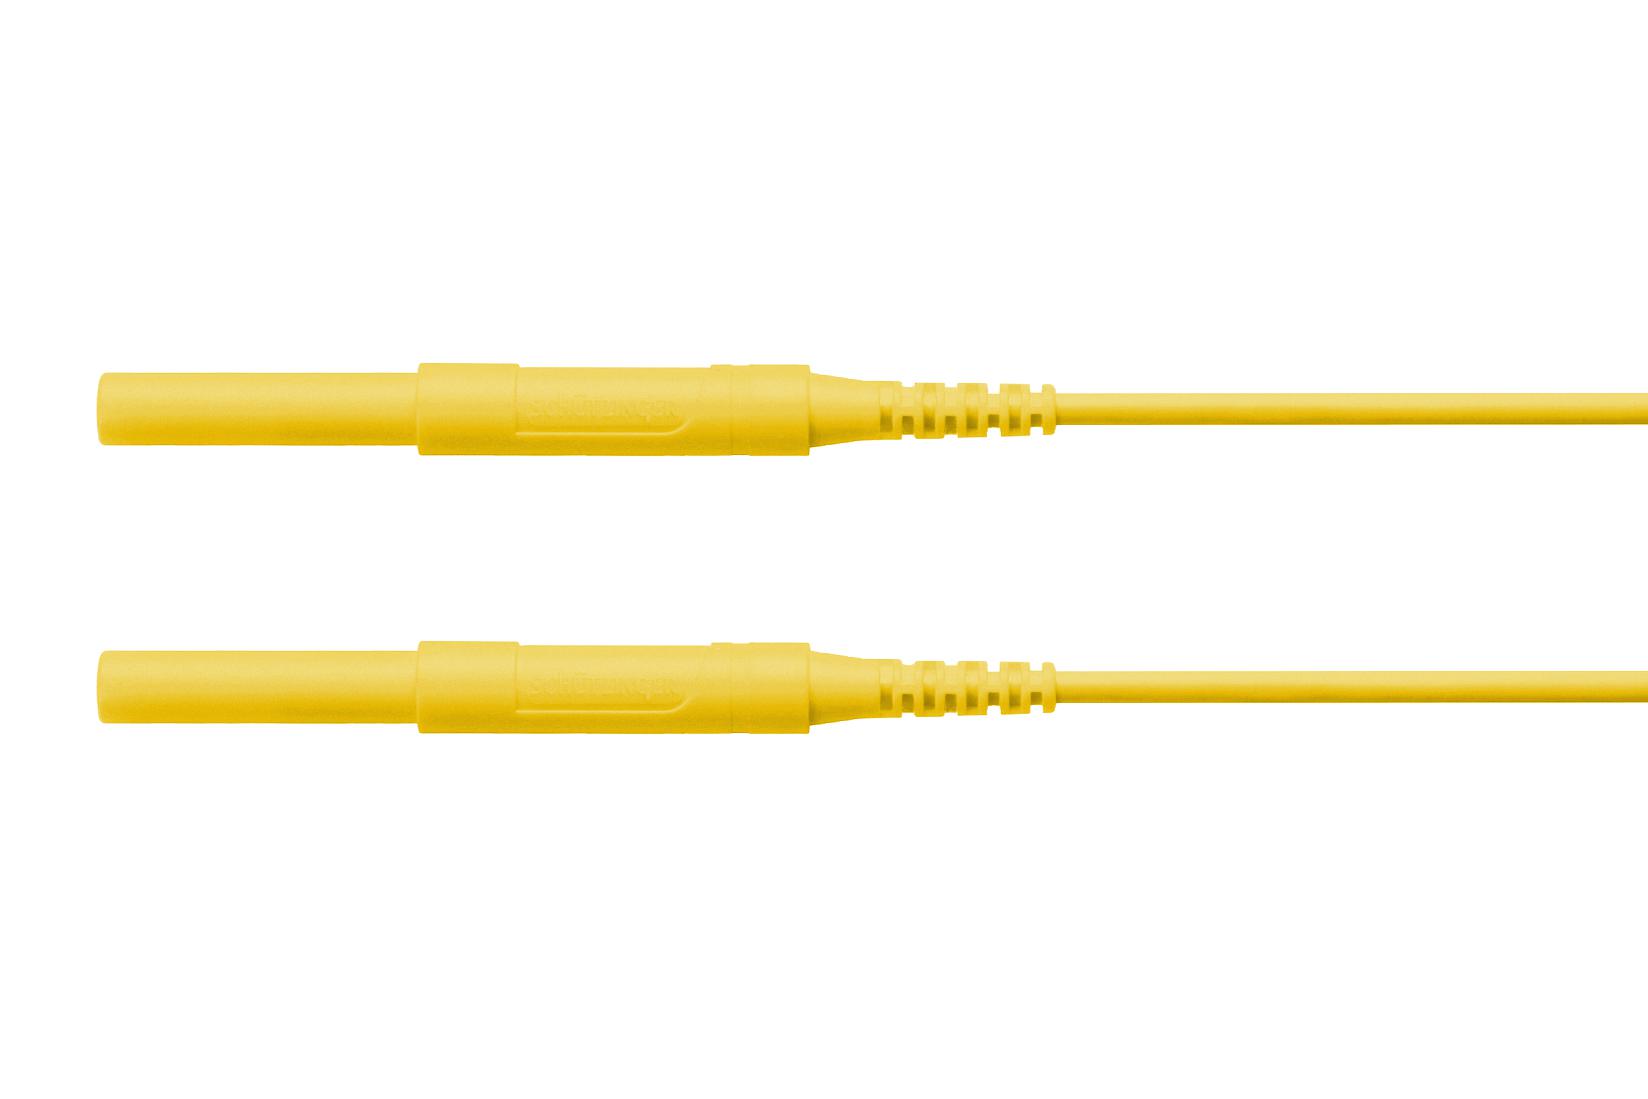 Schutzinger Hspl 8568 / Awg16 / 150 / Ge Test Lead, 4mm Banana Plug, 1.5M